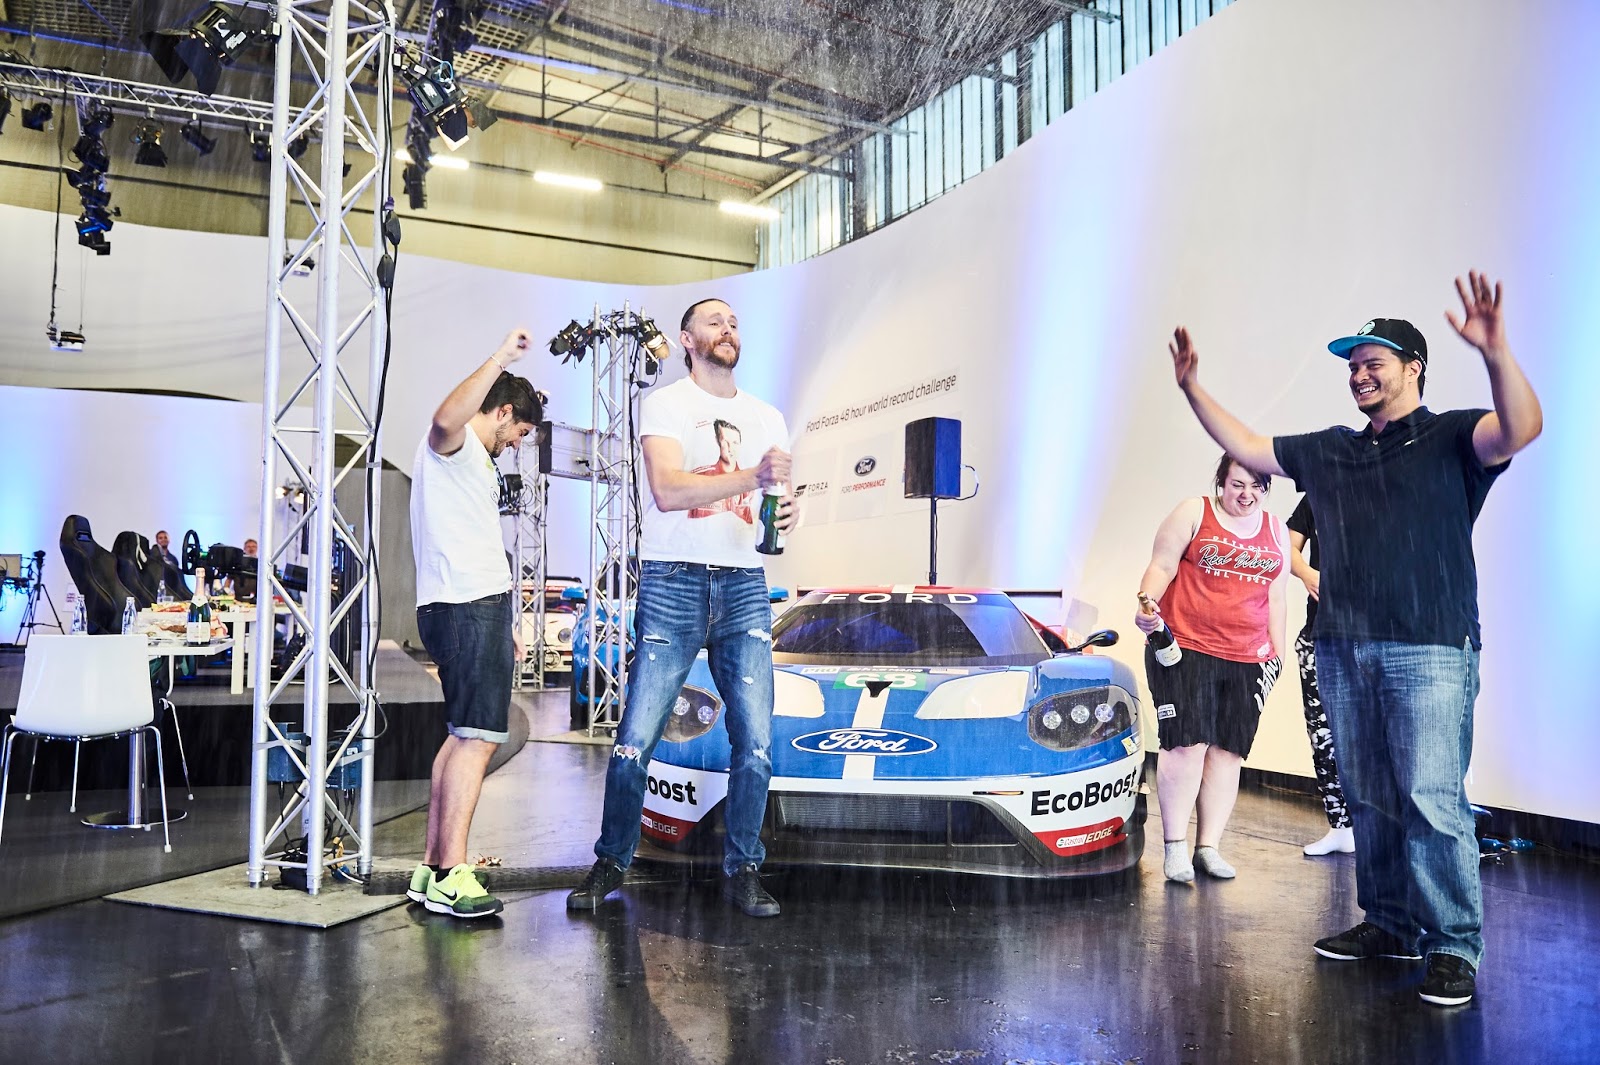 FordGamescom2016 89 Gamer έκανε νέο ρεκόρ Guinness, οδηγώντας συνολικά για 48 ώρες και 29 λεπτά στο Forza Motorsport 6!